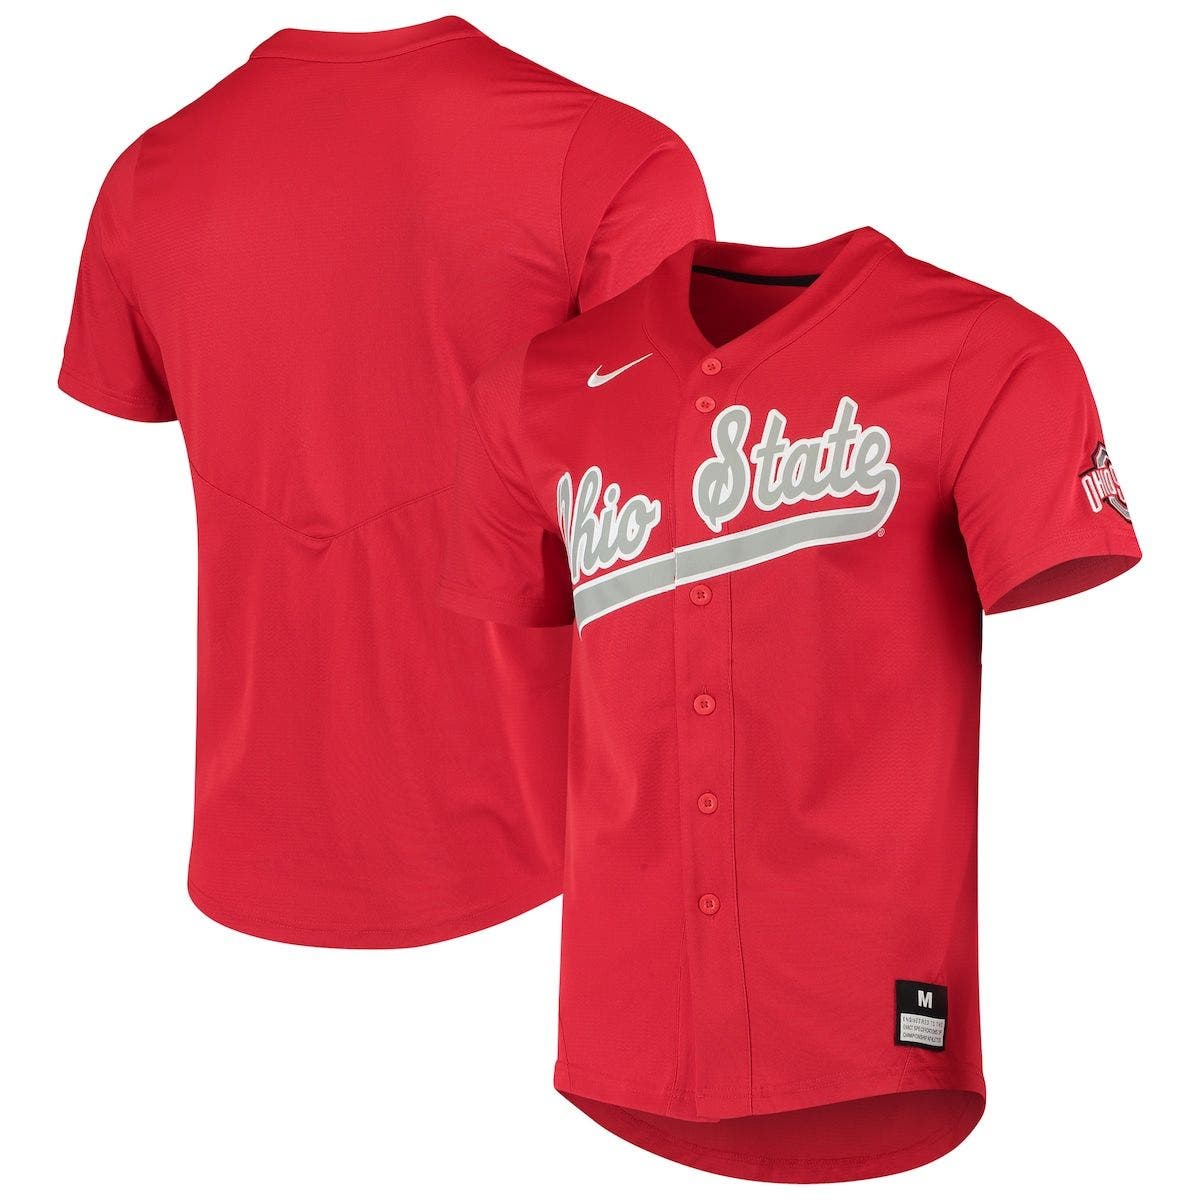 Men's Nike Scarlet Ohio State Buckeyes Vapor Untouchable Elite Replica Full-Button Baseball Jersey